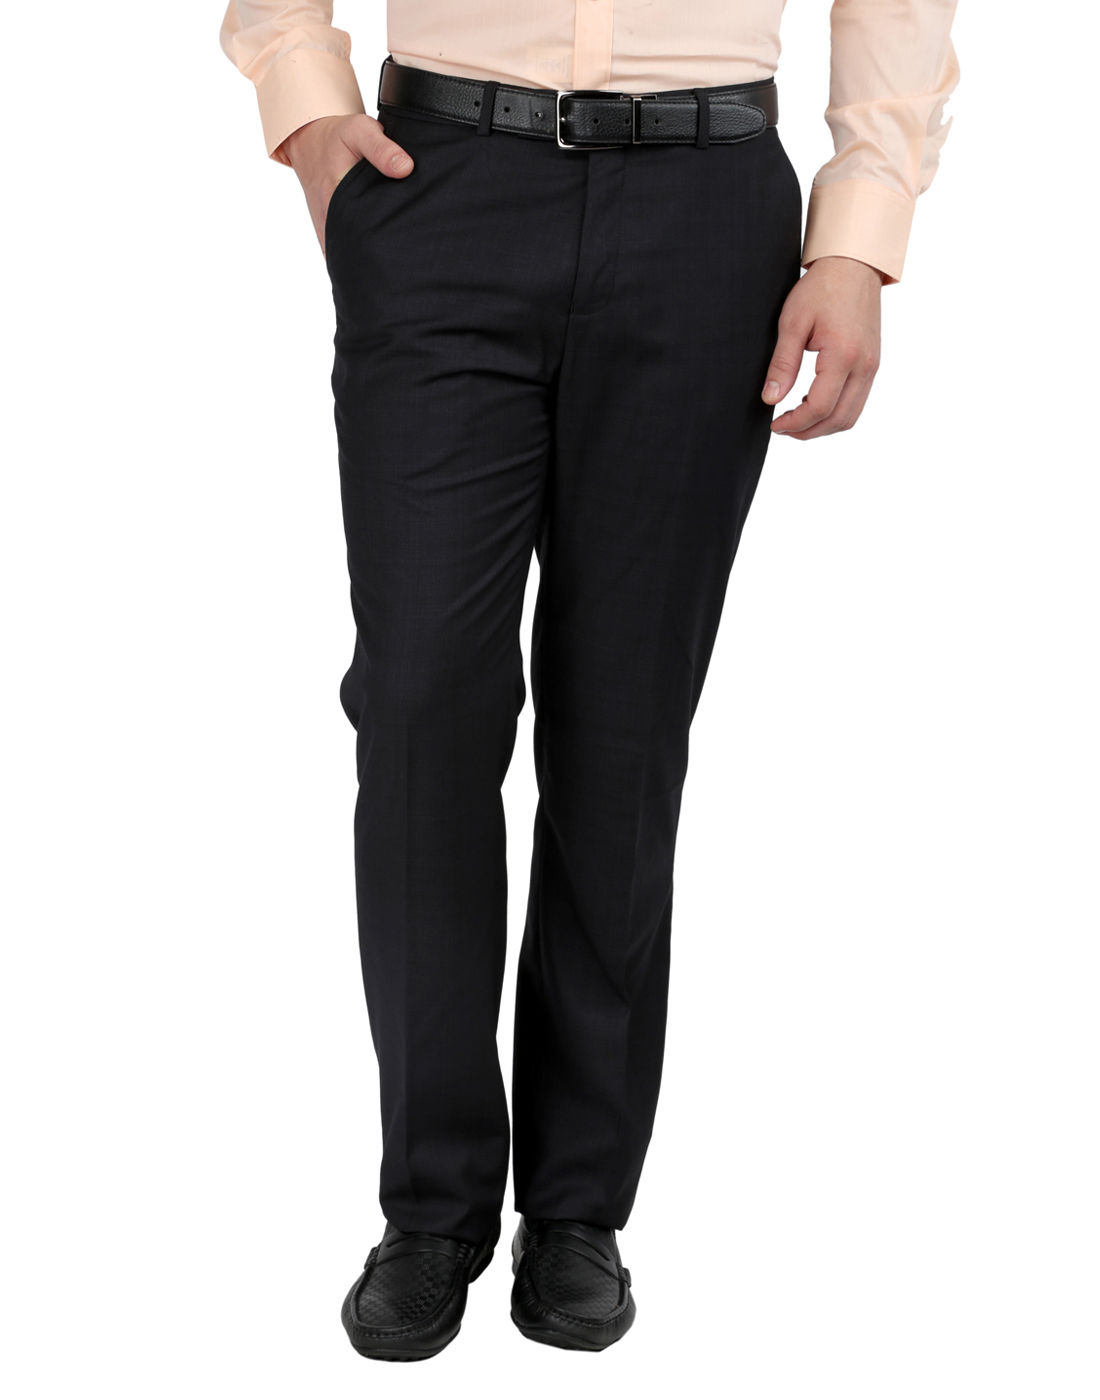 Buy Gwalior Black Slim Fit Formal Trouser Online @ ₹589 from ShopClues